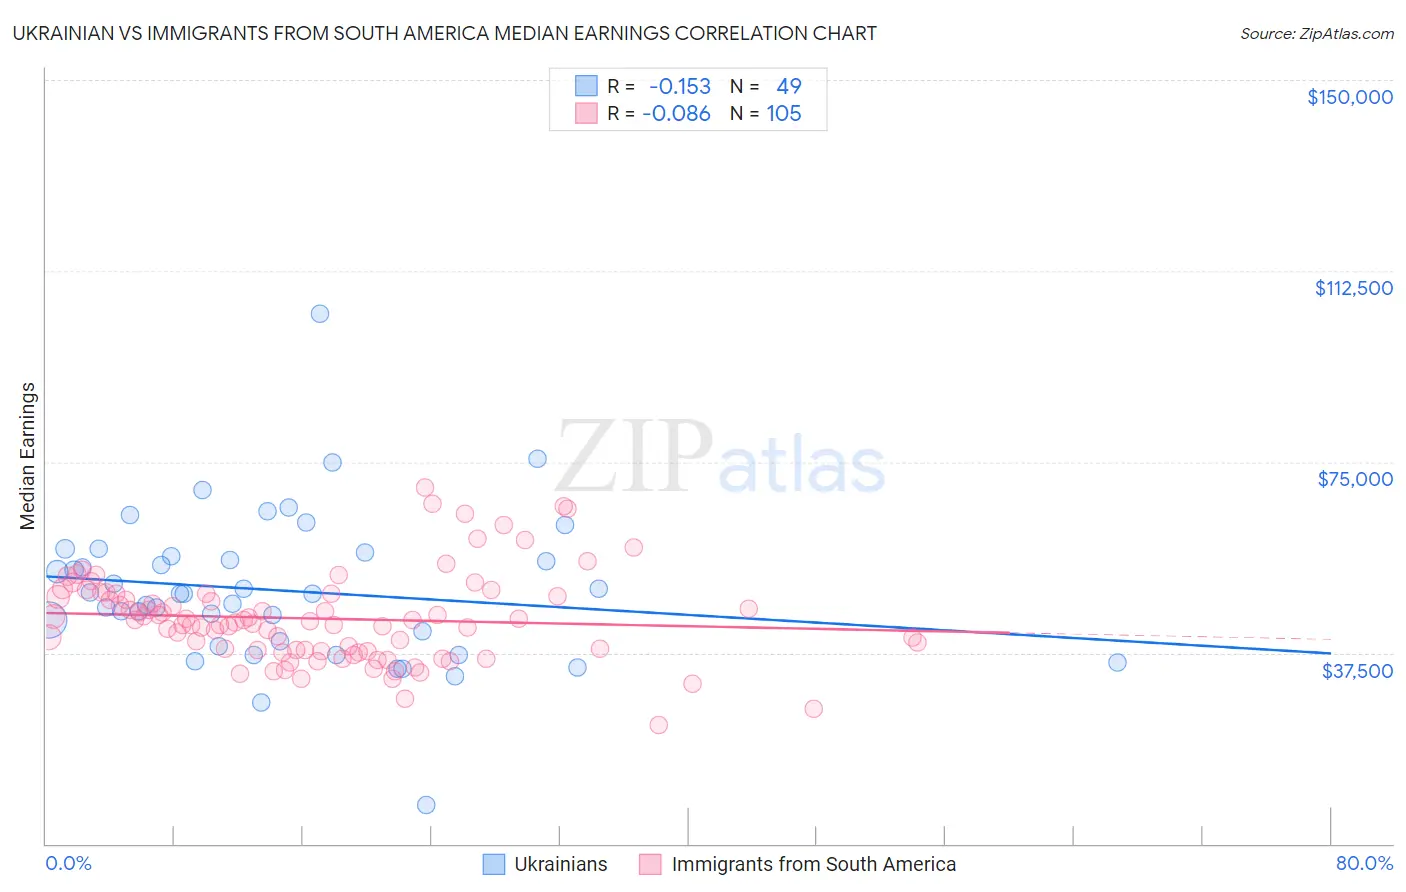 Ukrainian vs Immigrants from South America Median Earnings